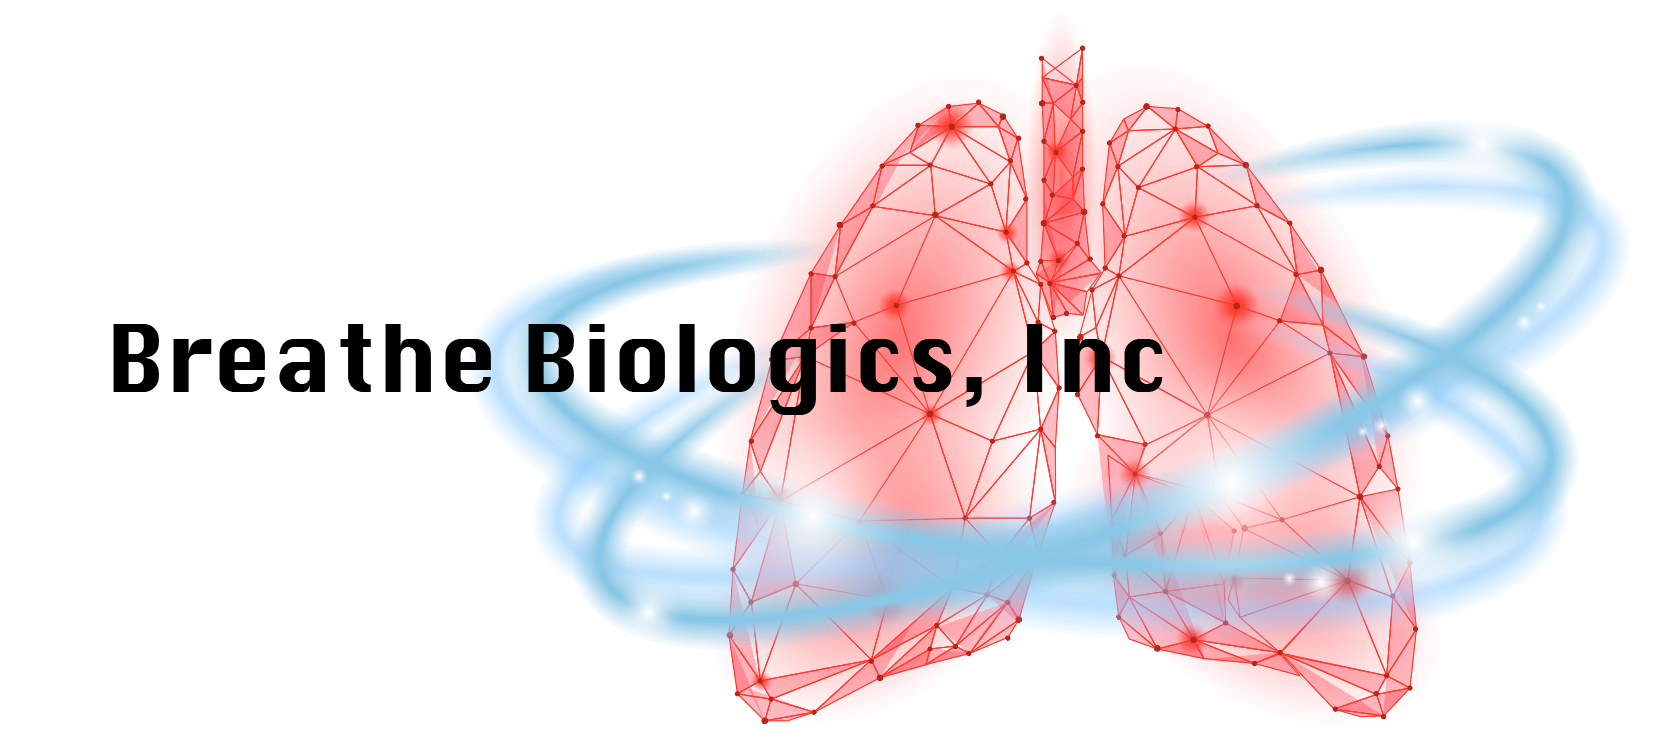 Breathe Biologics, Inc.